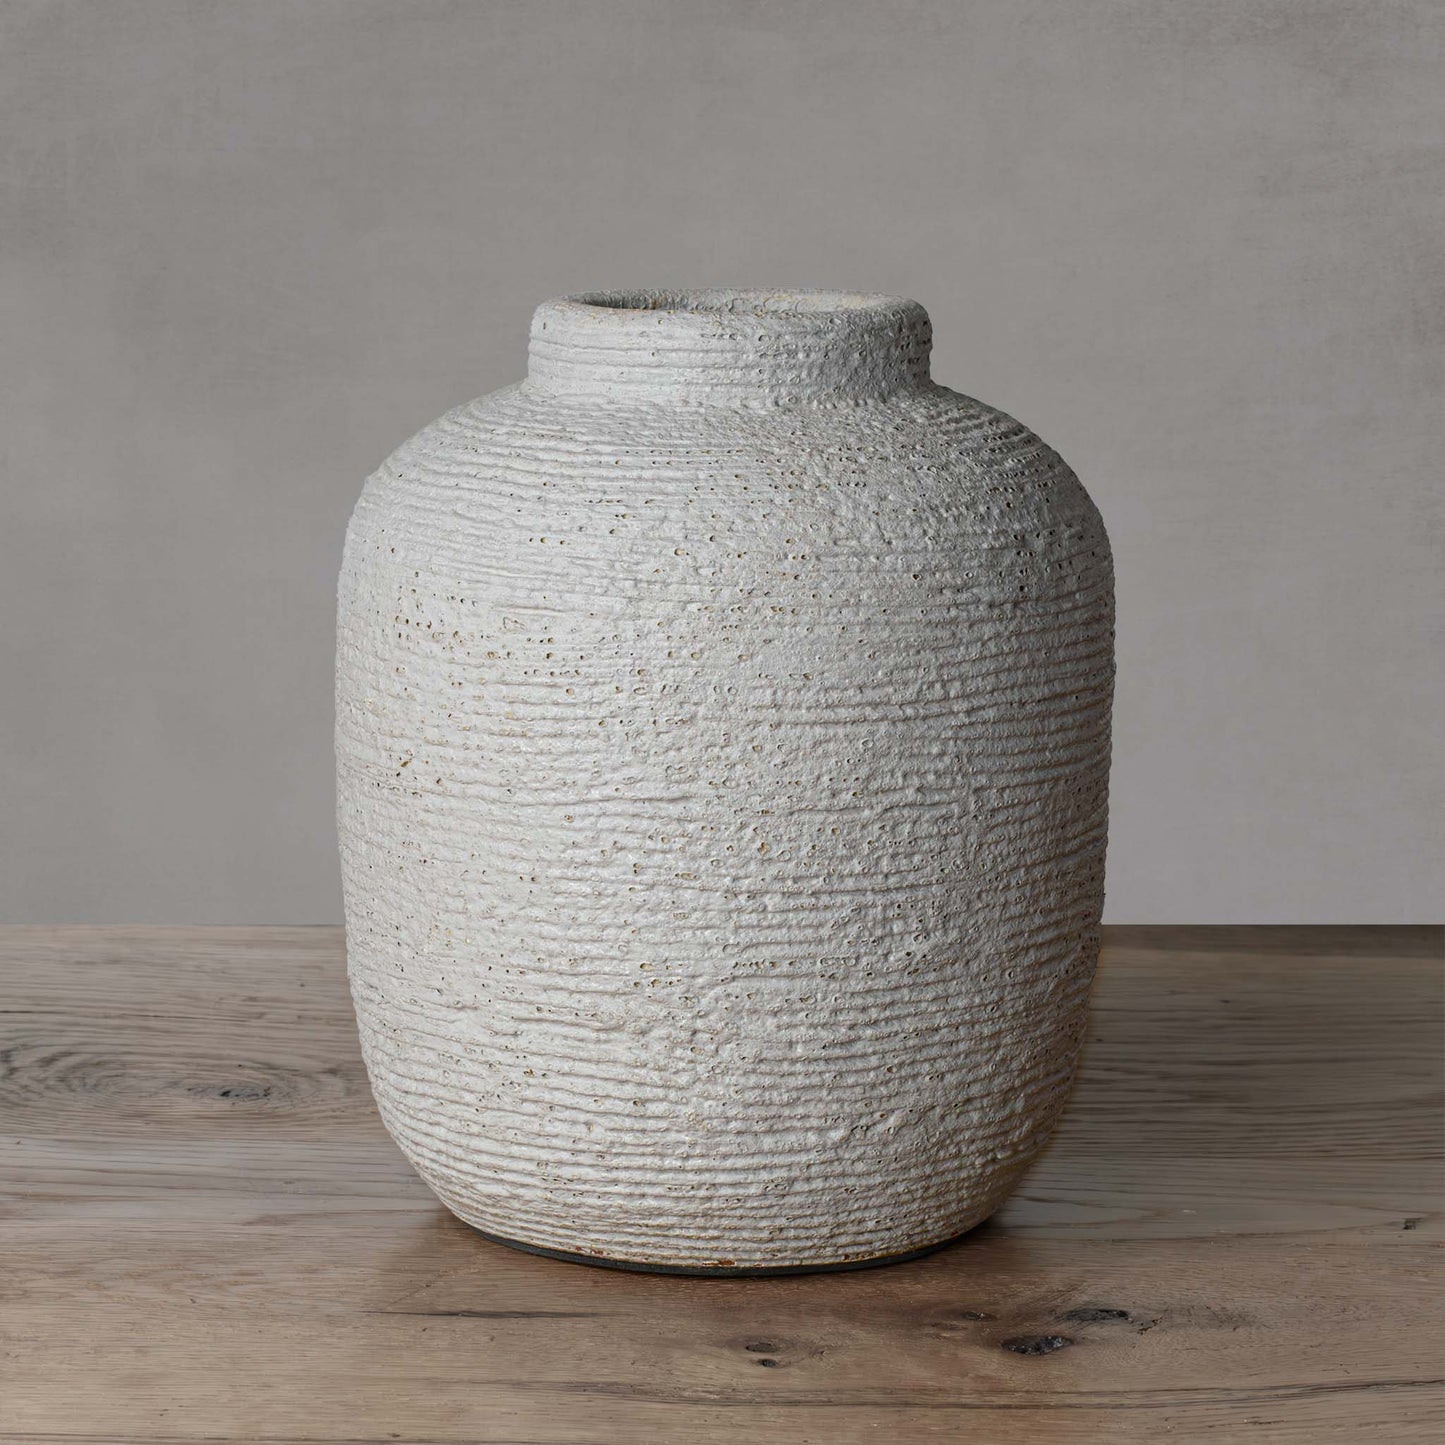 Medium textured cement decorative vase with light gray background.